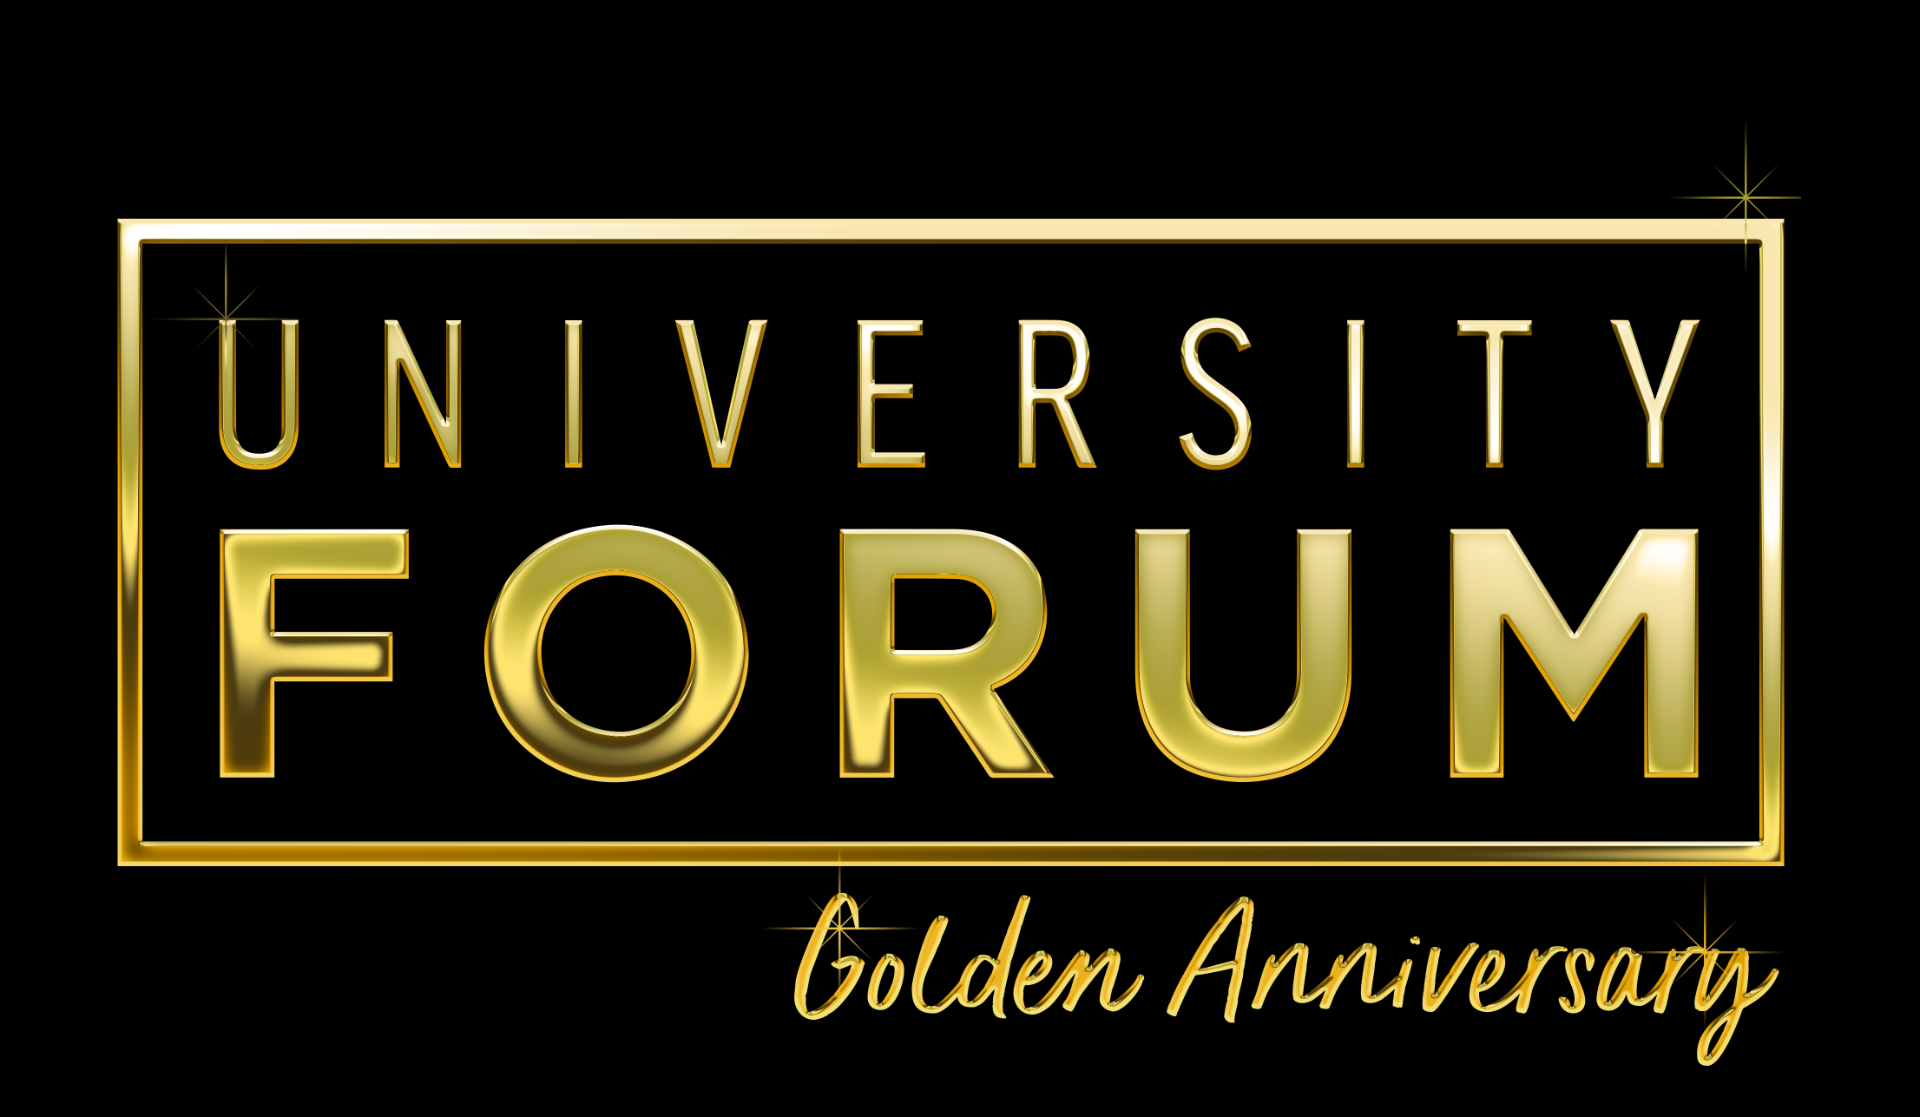 University Forum Anniversary Logo